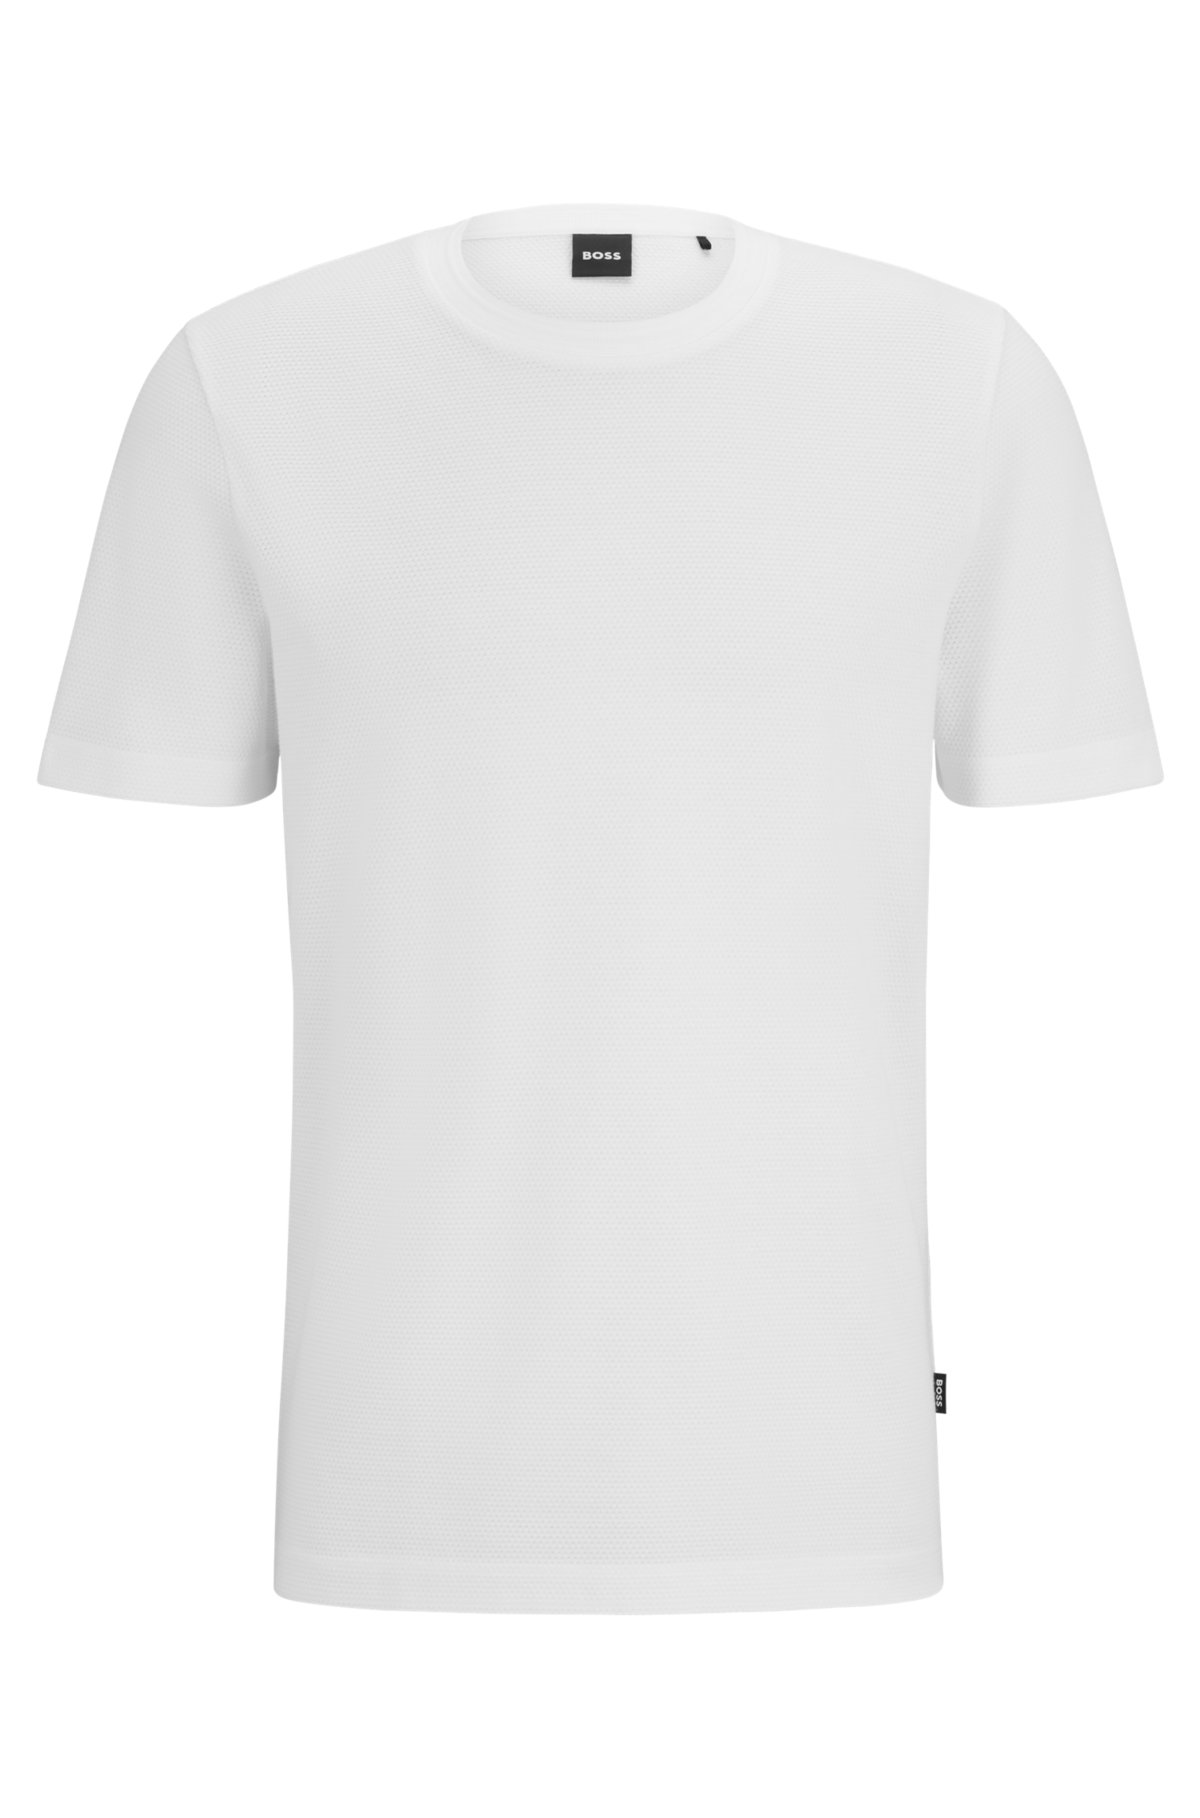 BOSS - Cotton-blend T-shirt with bubble-jacquard structure